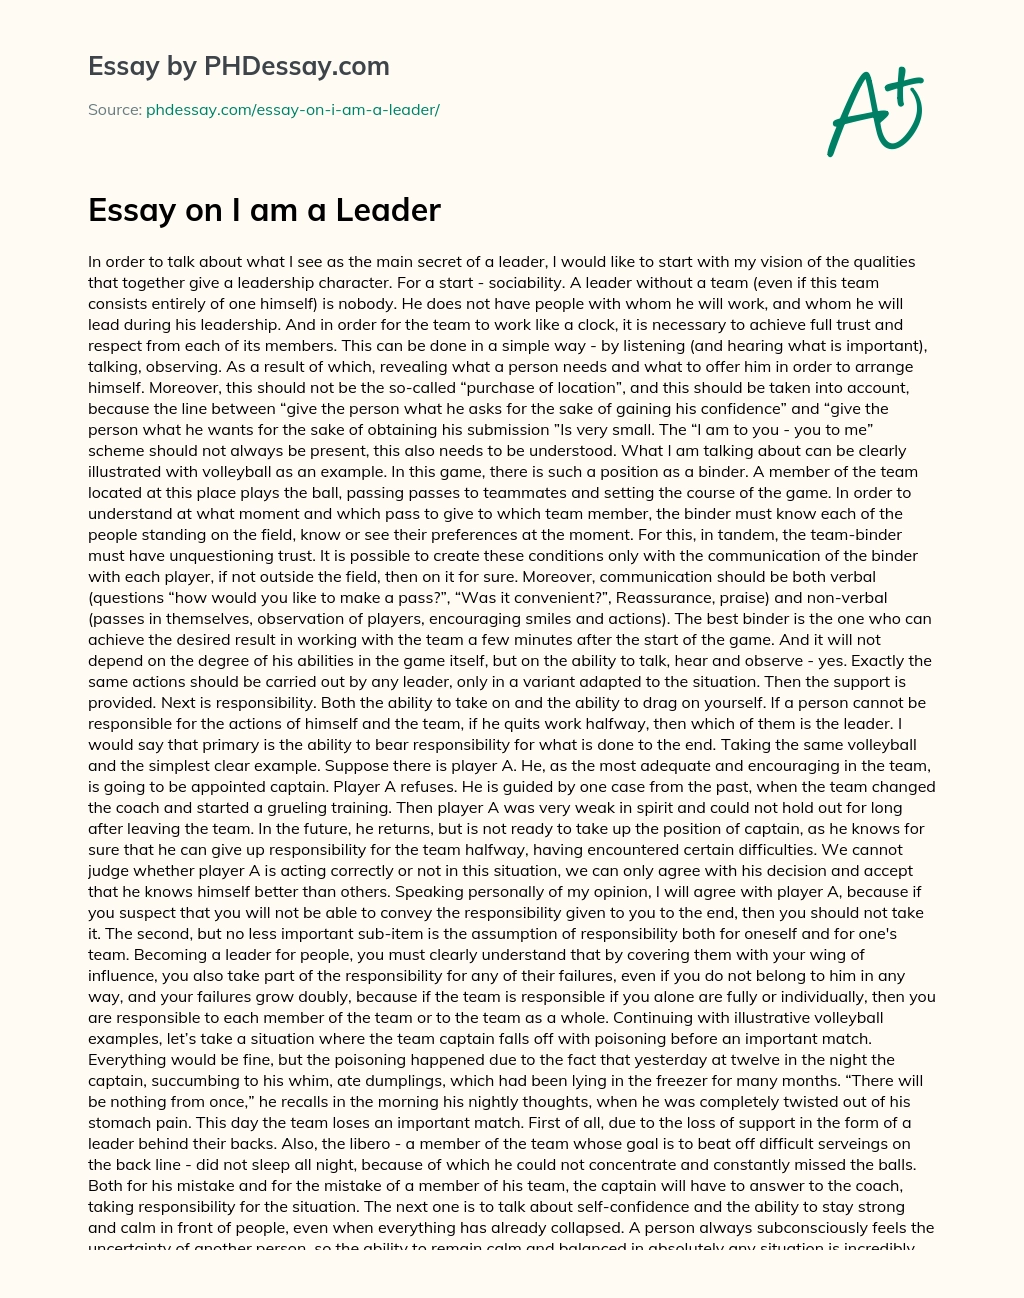 Essay on I am a Leader essay